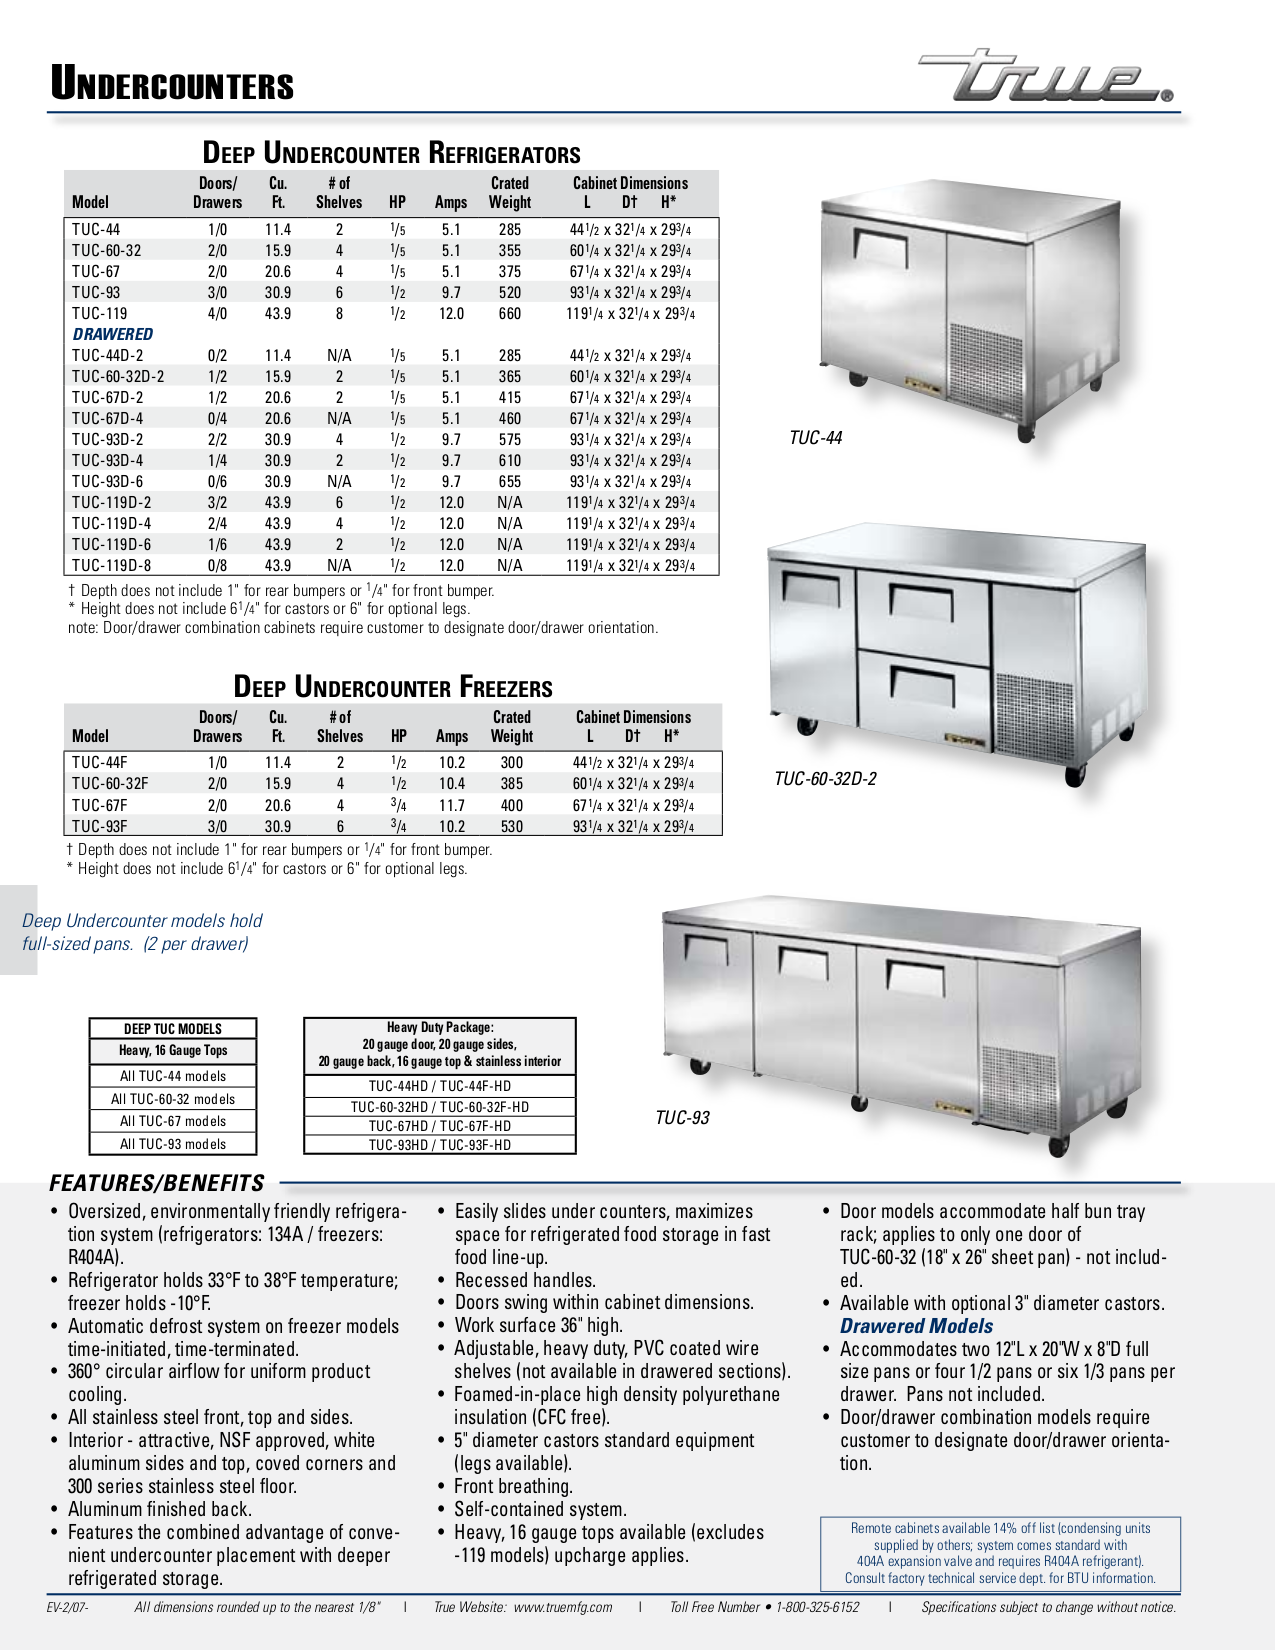 pdf for True Refrigerator TUC-67D-2 manual